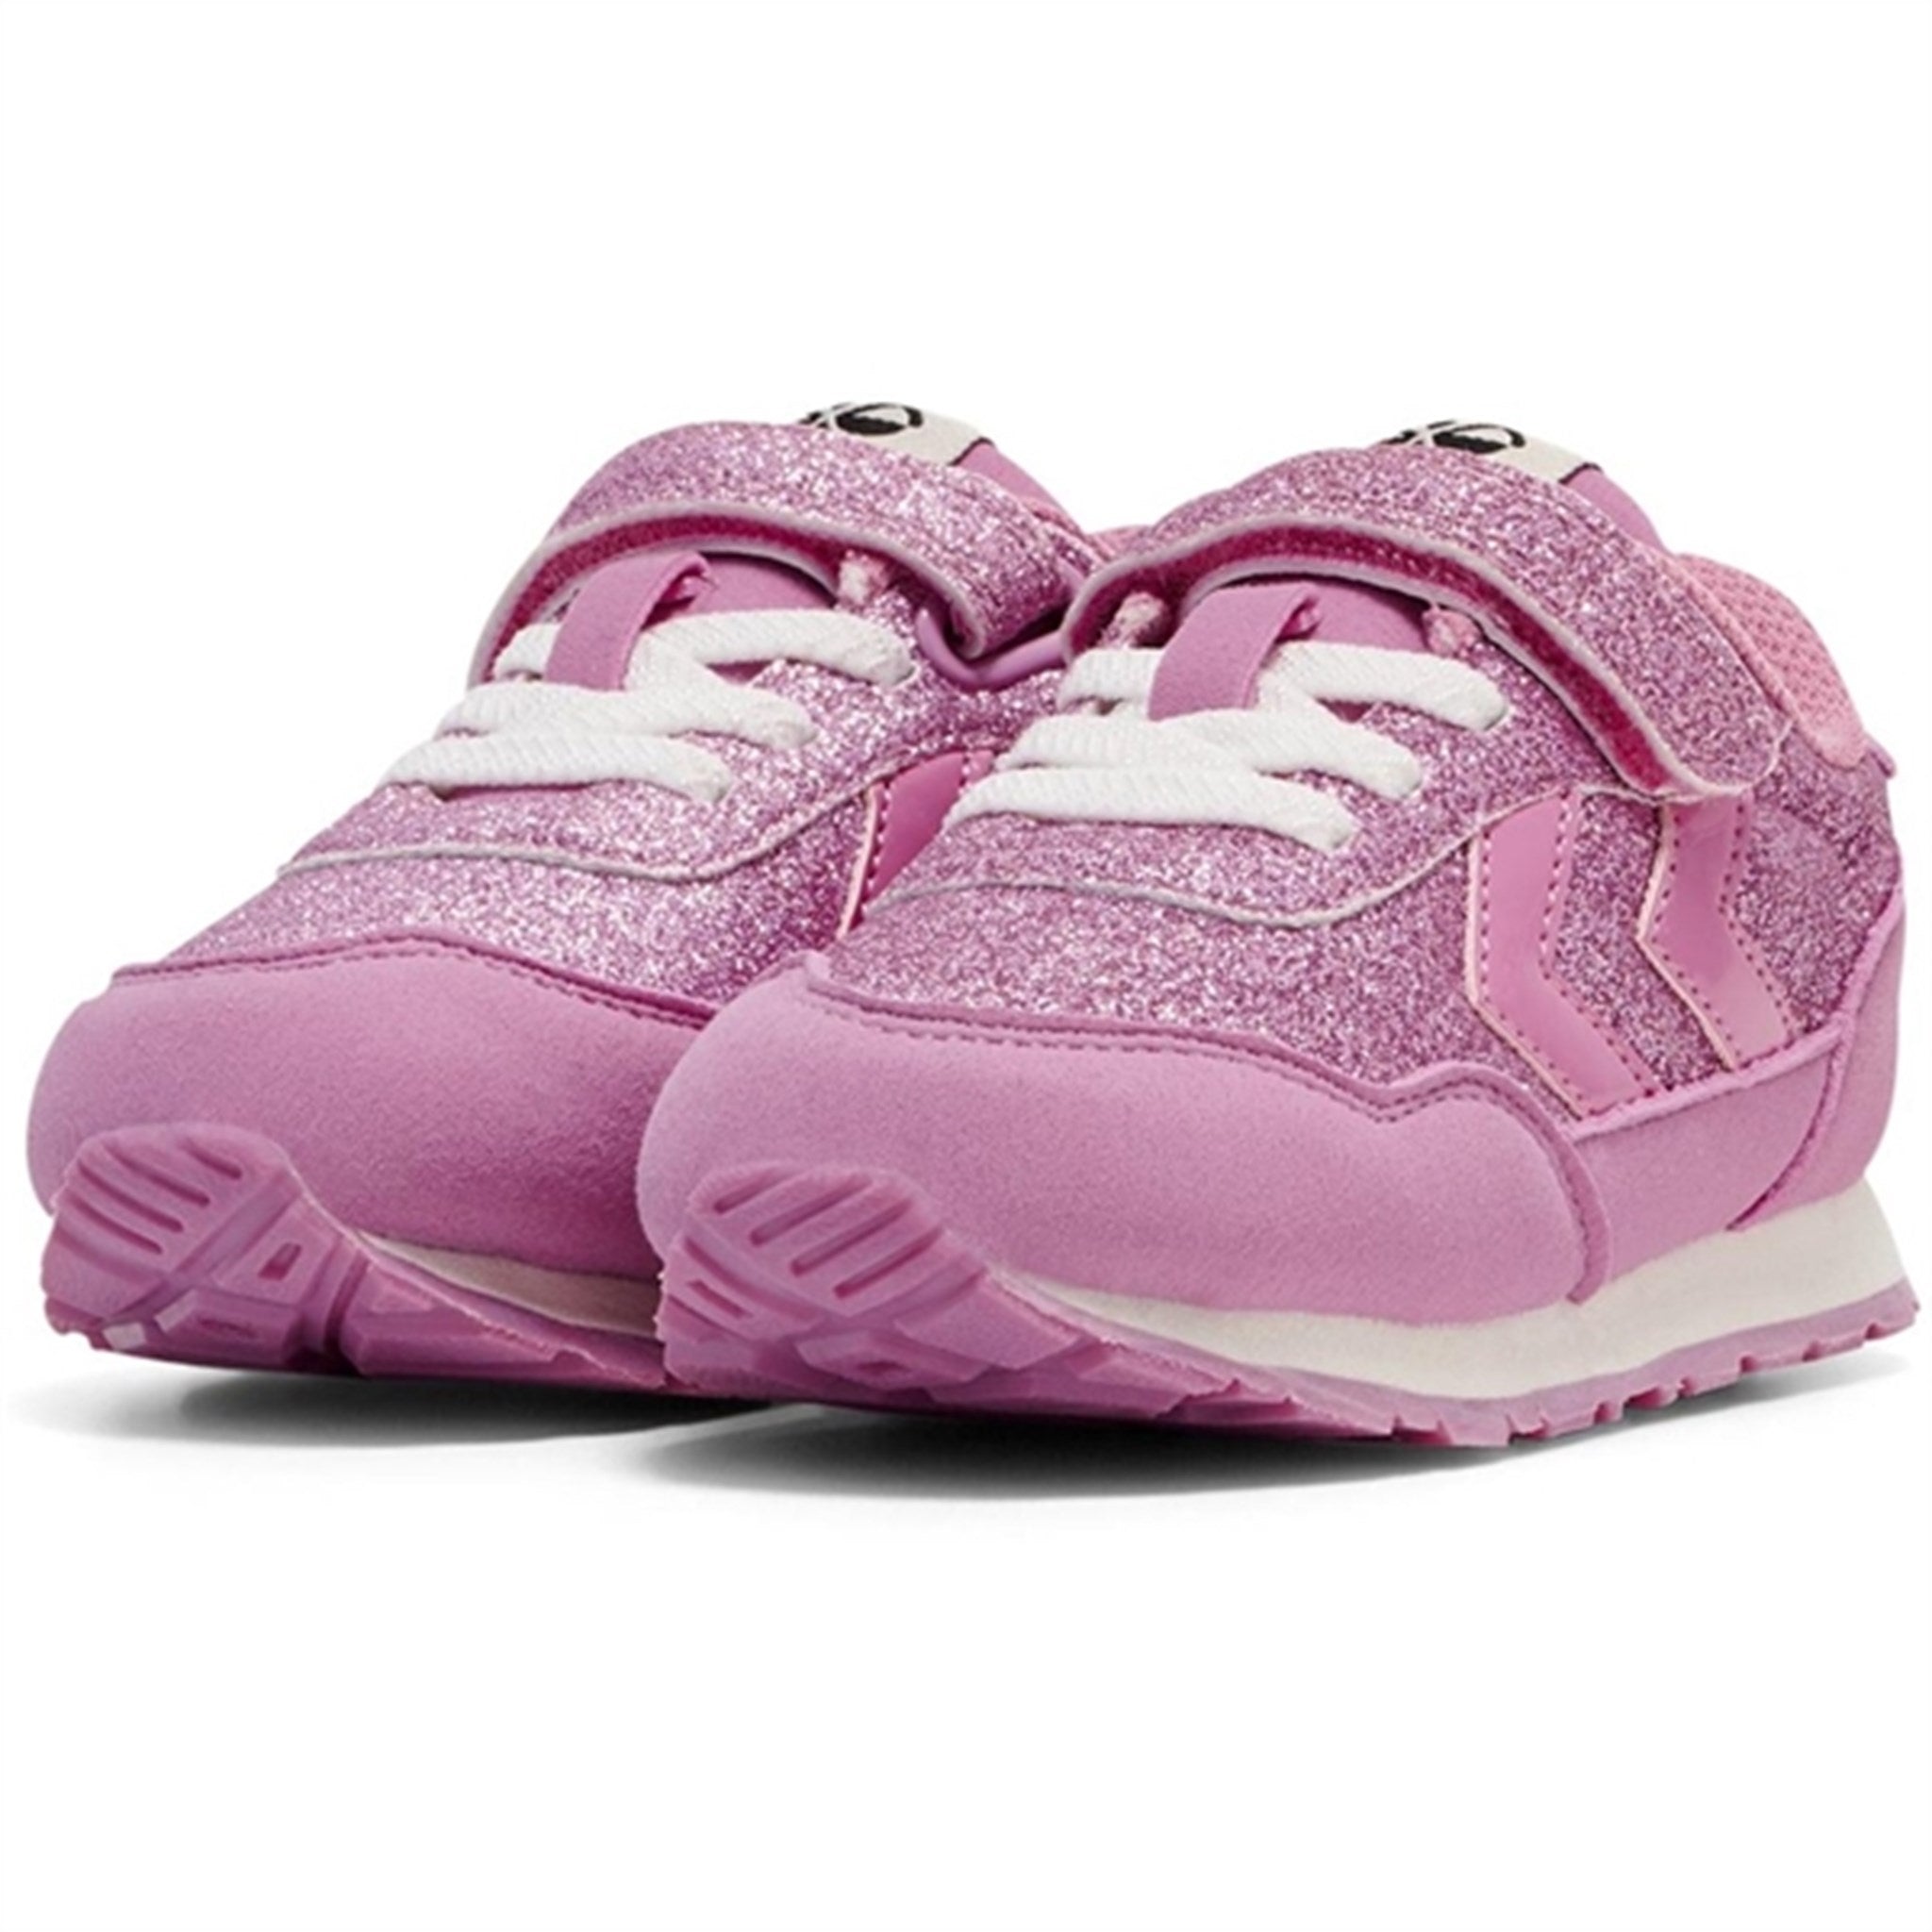 Hummel Reflex Glitter Infant Sneakers Pink 2